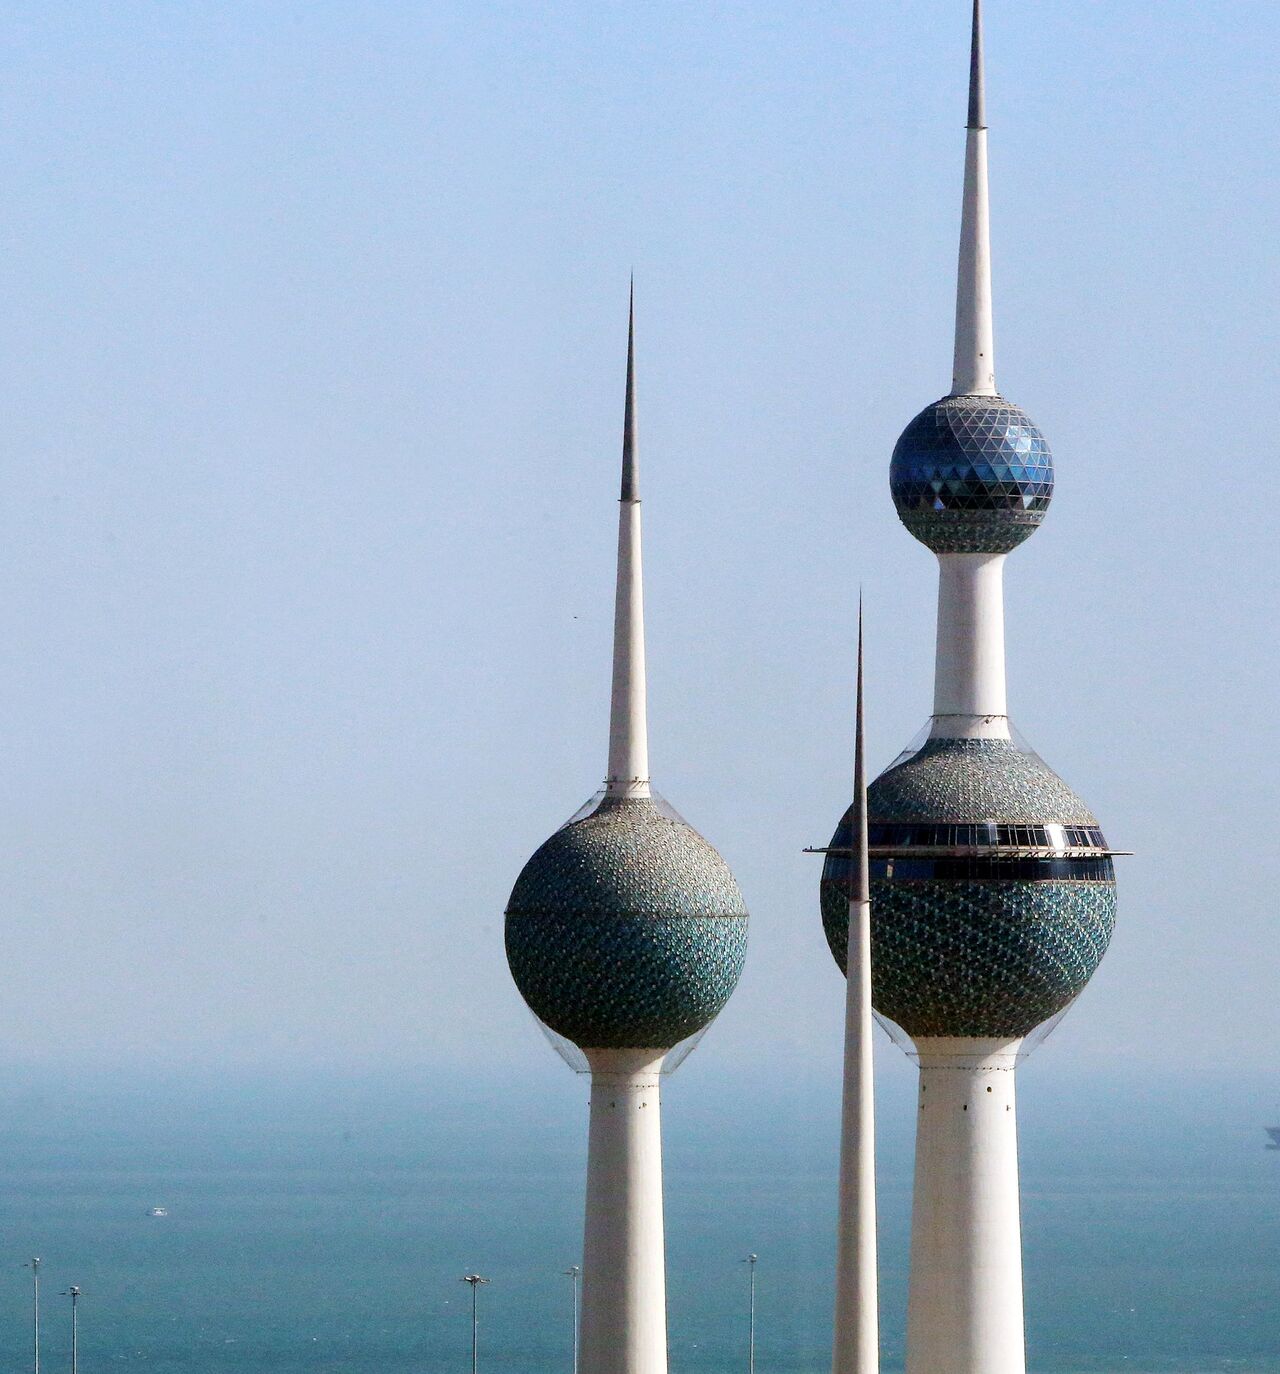 Kuwait cover image